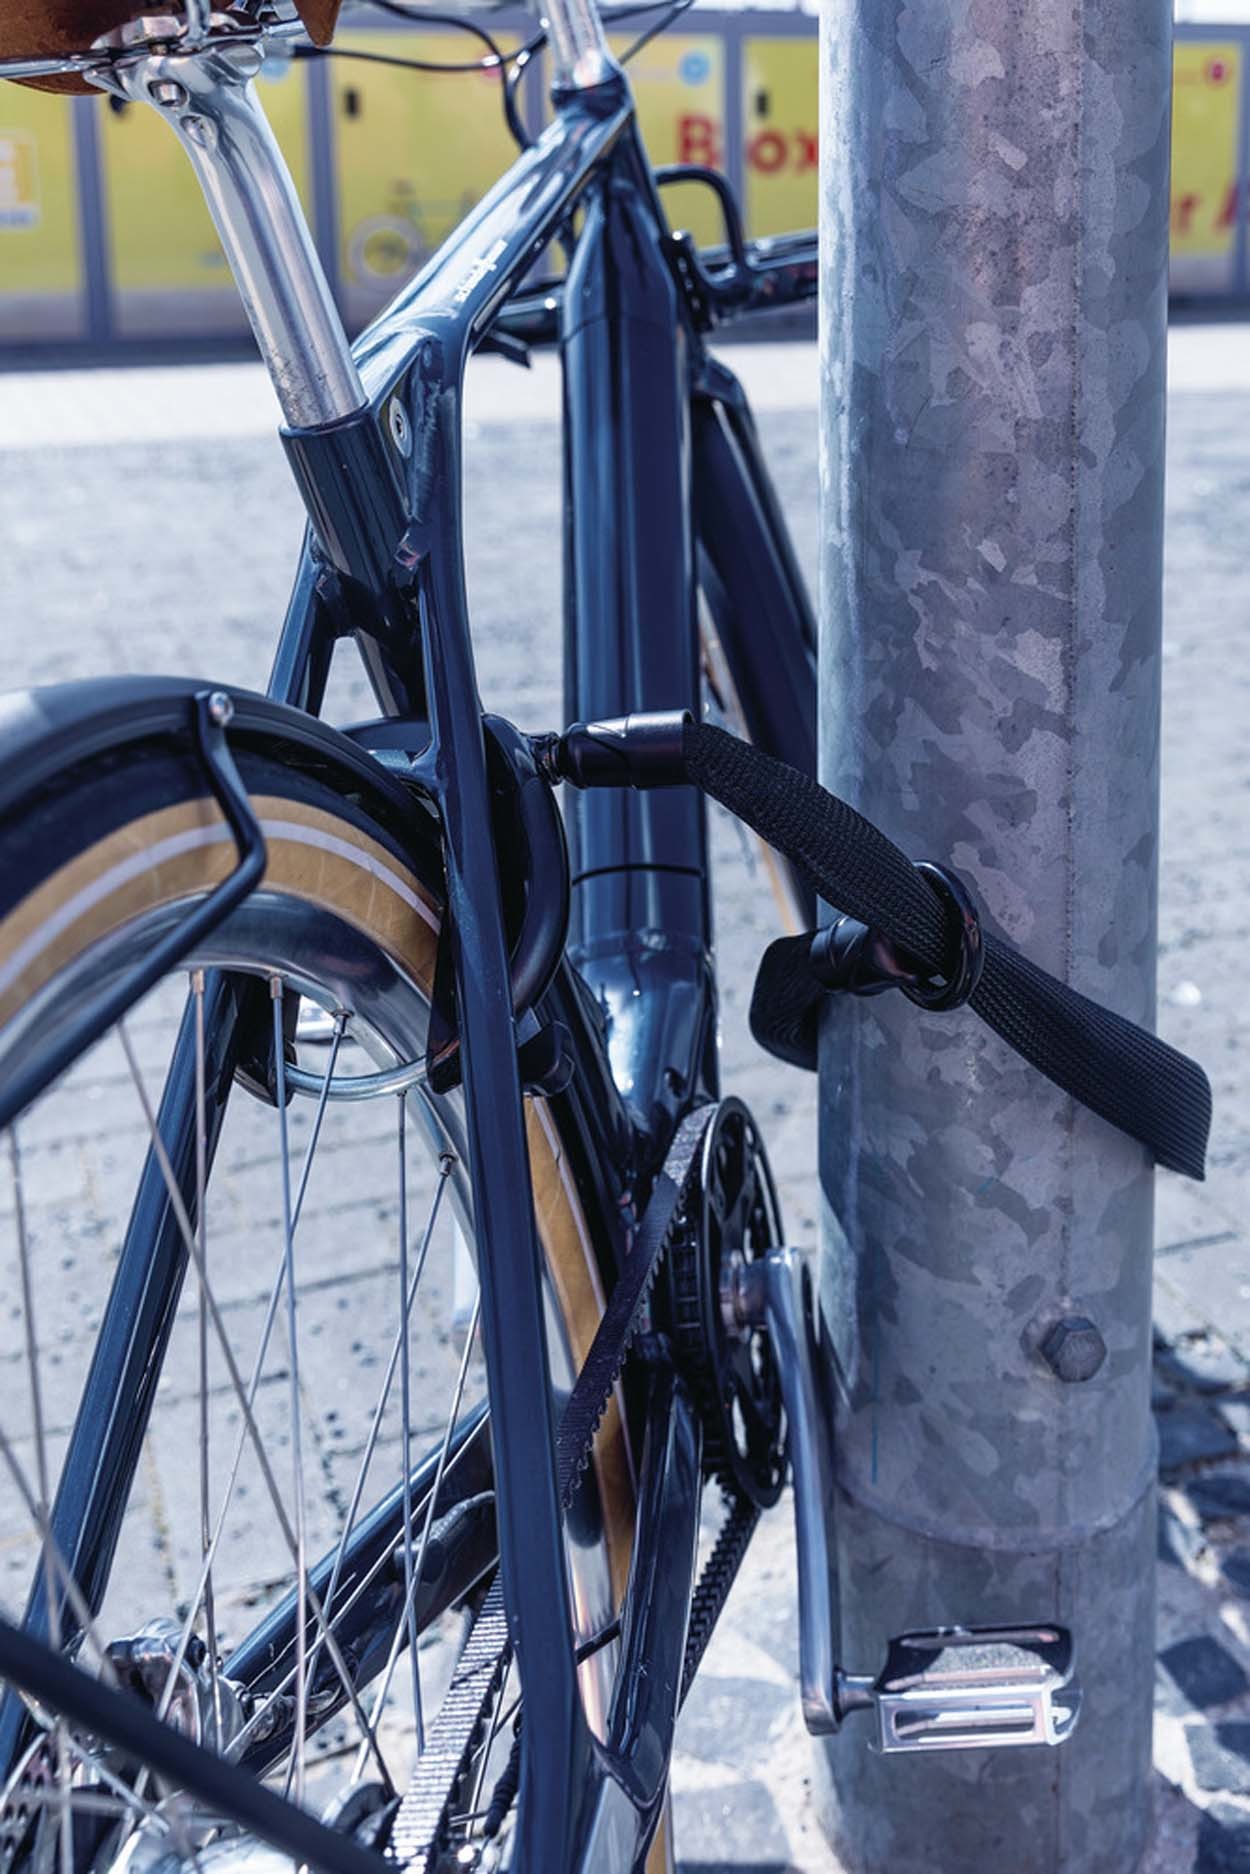 Stahlkette, 6KS Loop, Flexible Vierkantkette für Fahrradschlösser